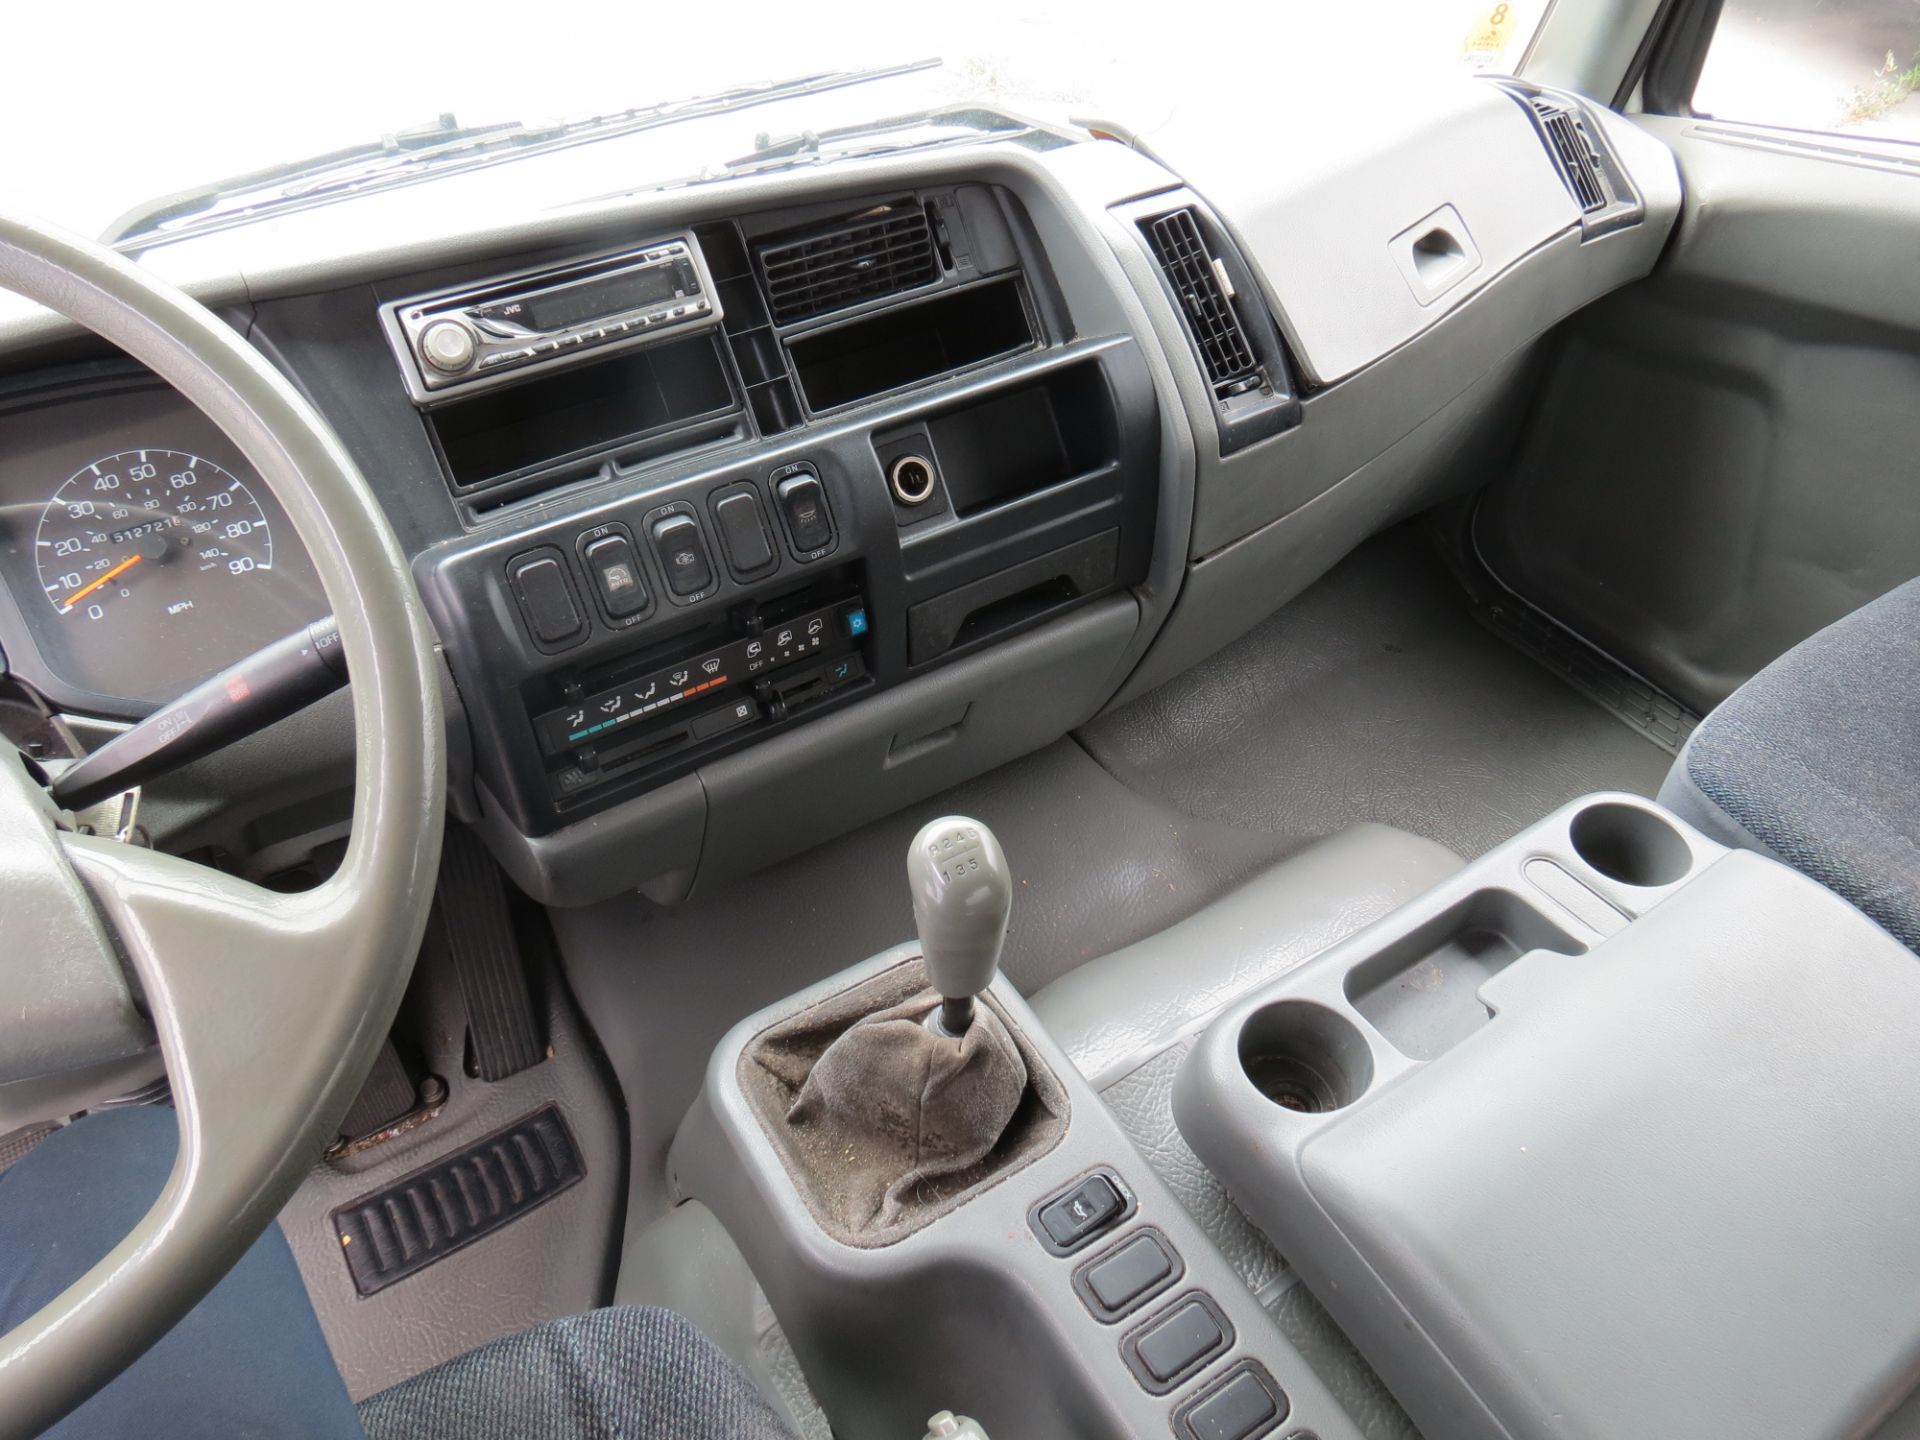 2007 Mitsubishi Fuso 28' FM-260 Box Truck W/Lift Gate, Manual Transmission, #113, VIN: - Image 9 of 11